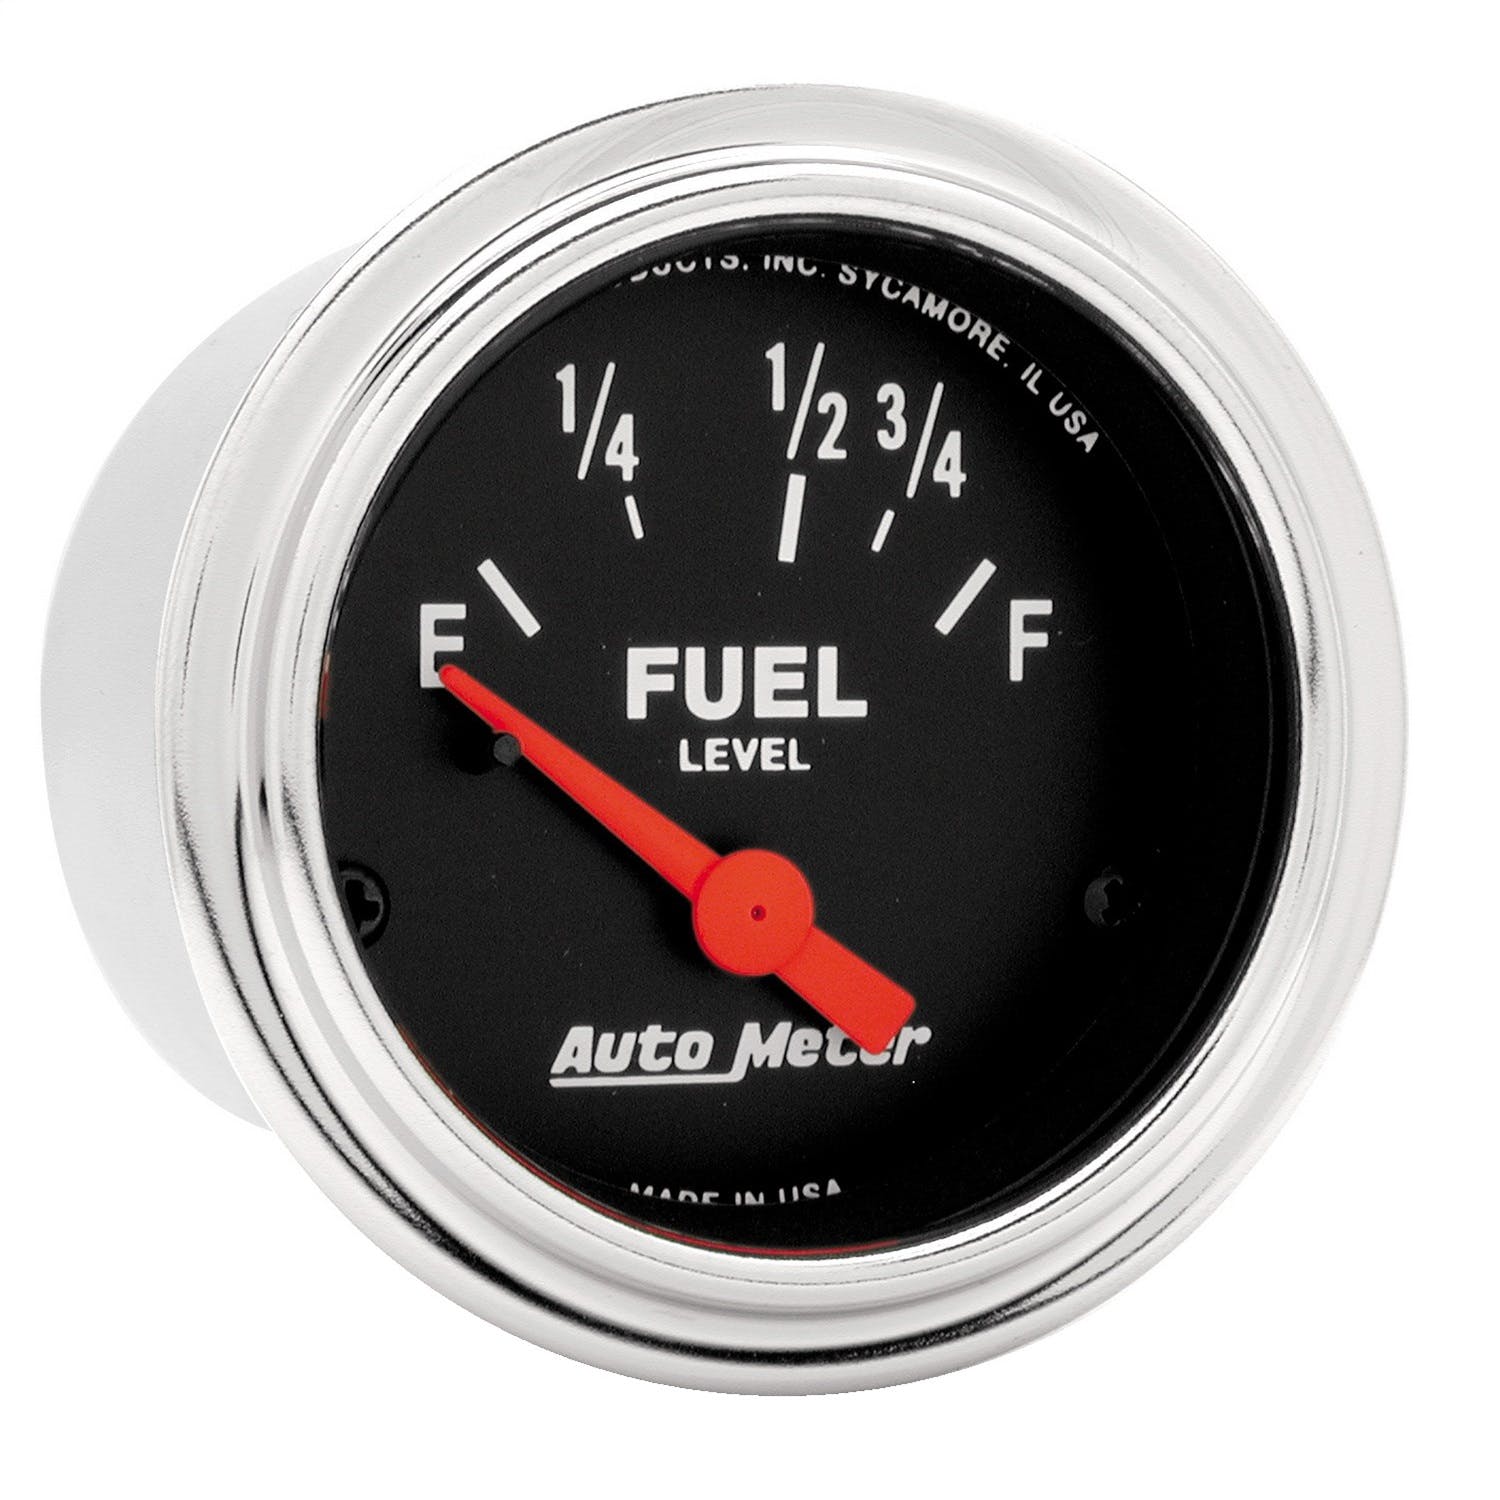 AutoMeter Products 2515 Fuel Level Gauge 73 E/8-12 F